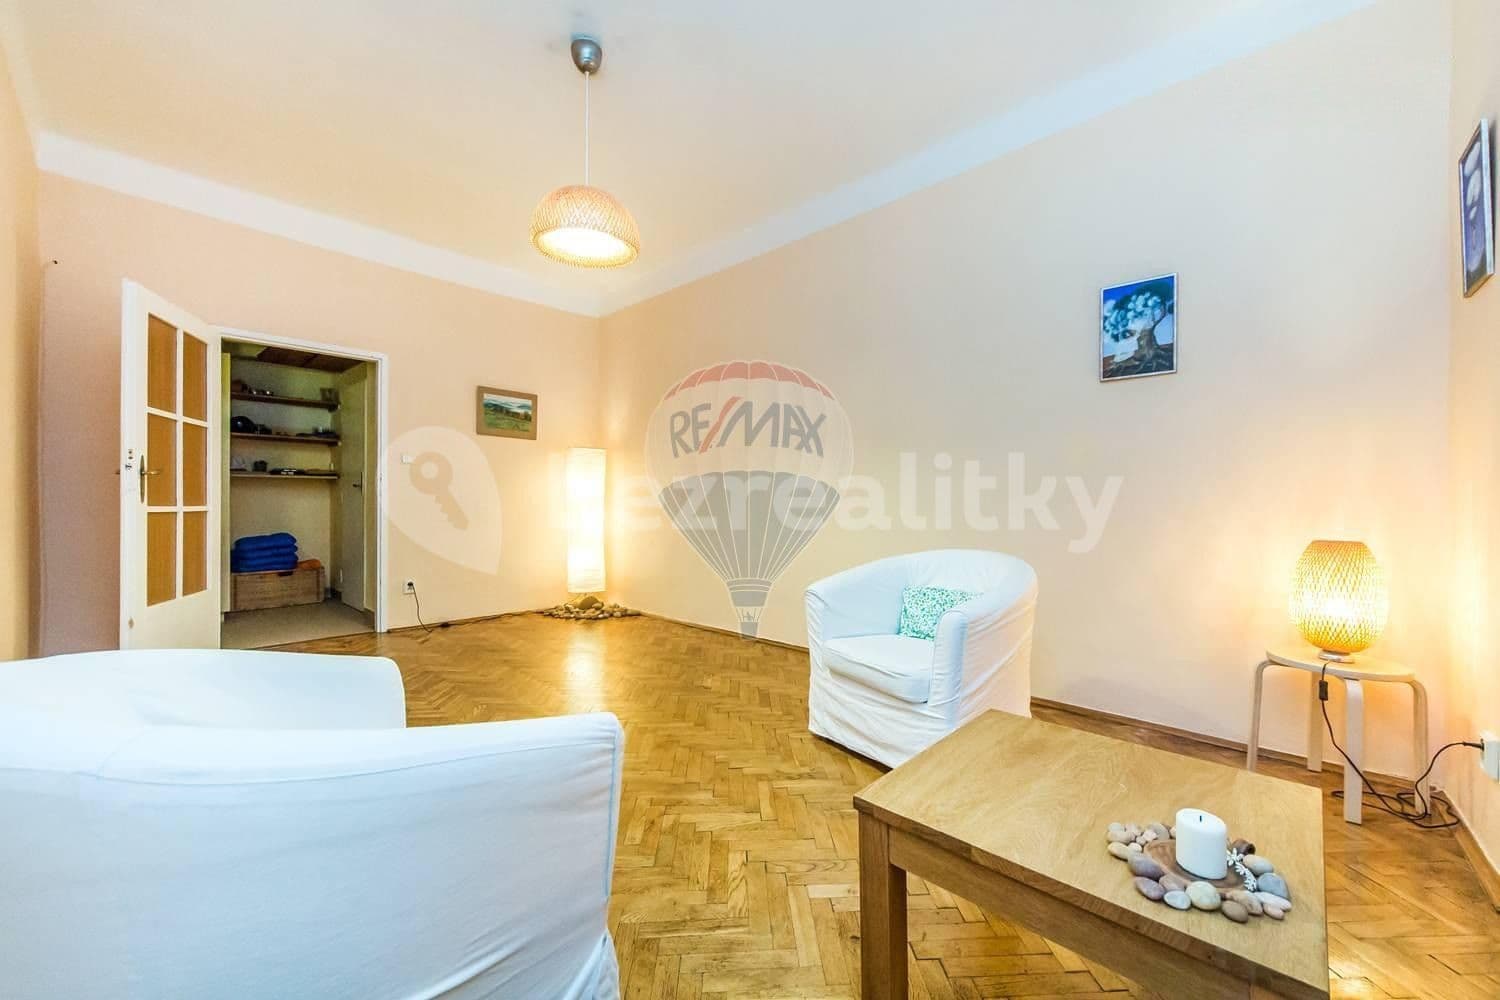 1 bedroom with open-plan kitchen flat to rent, 49 m², Za Poštou, Prague, Prague